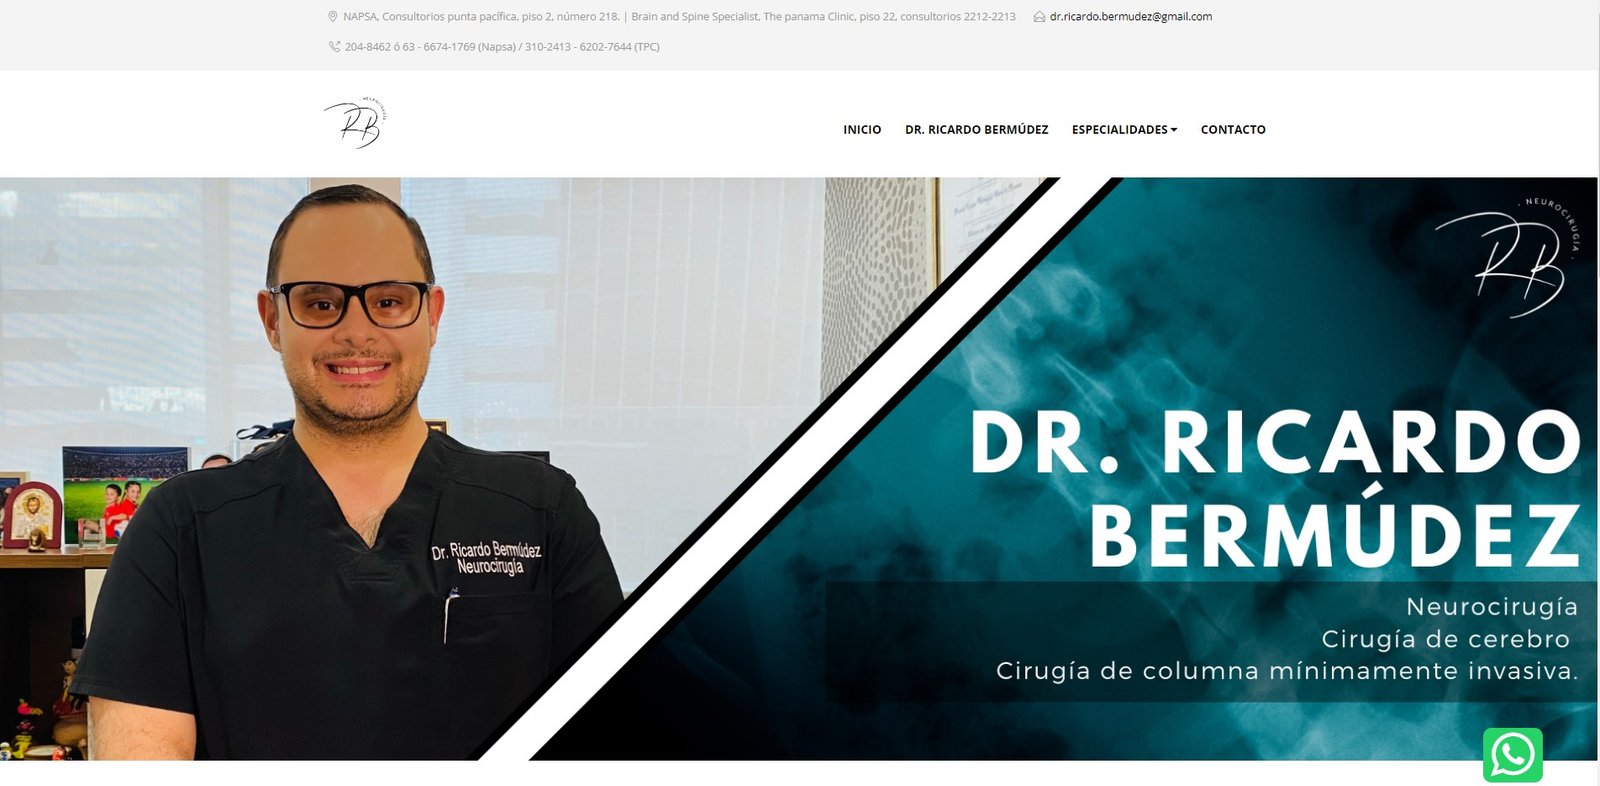 Dr. Ricardo Bermudez